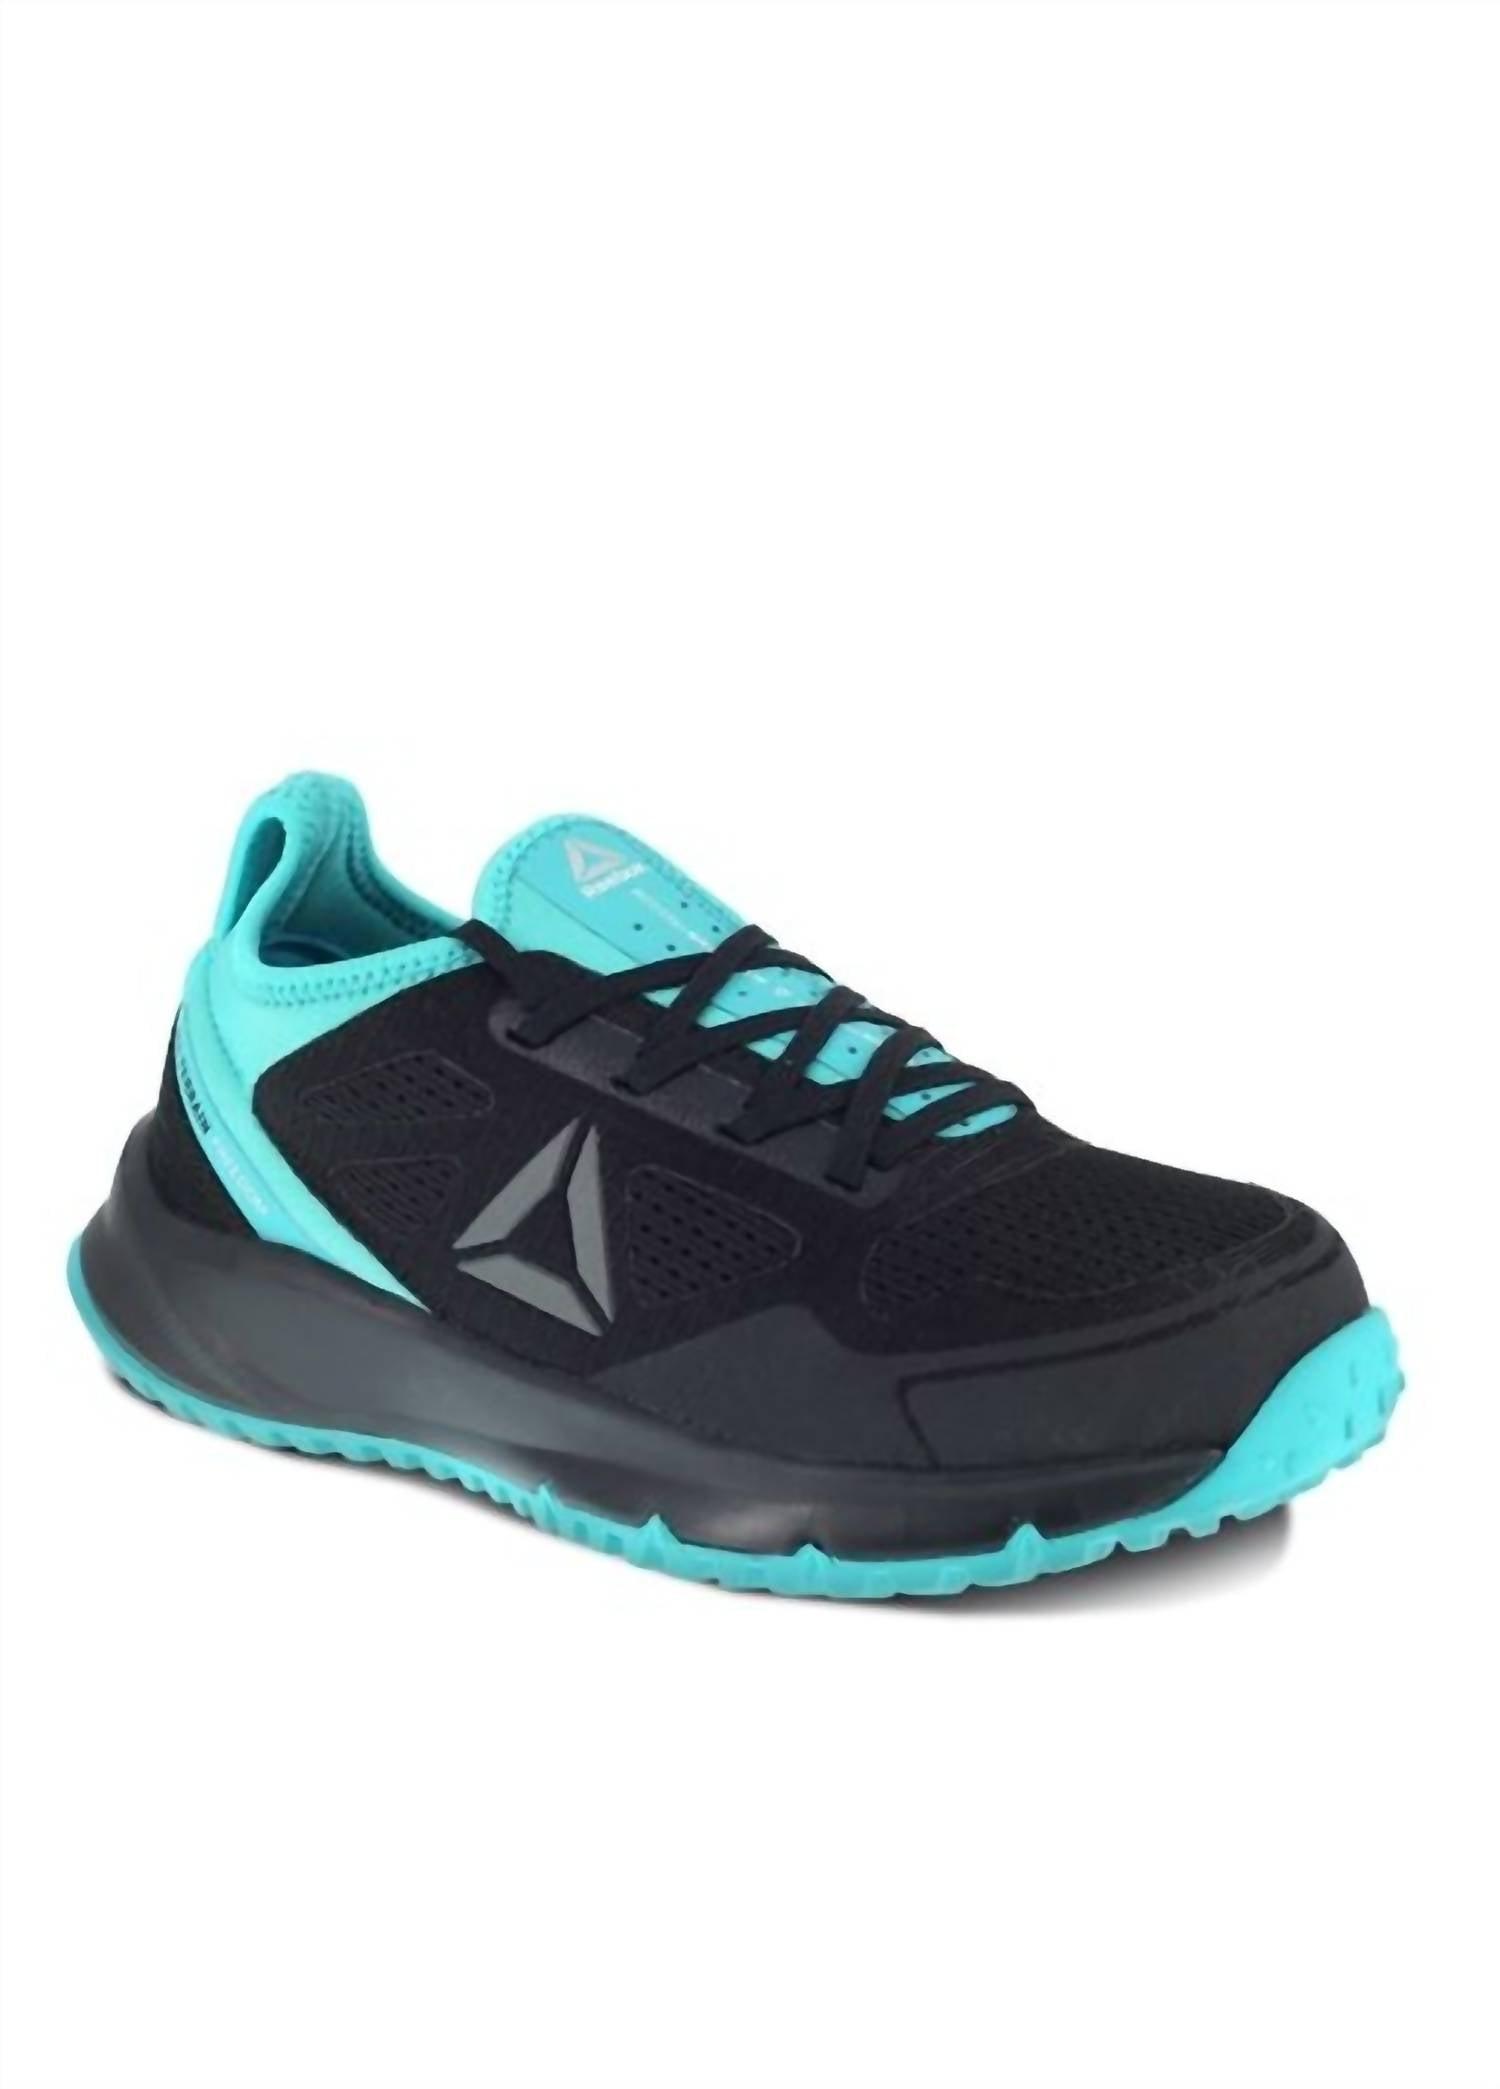 Reebok 's All Terrain Trail Running Work Shoes - Medium Width in Blue | Lyst